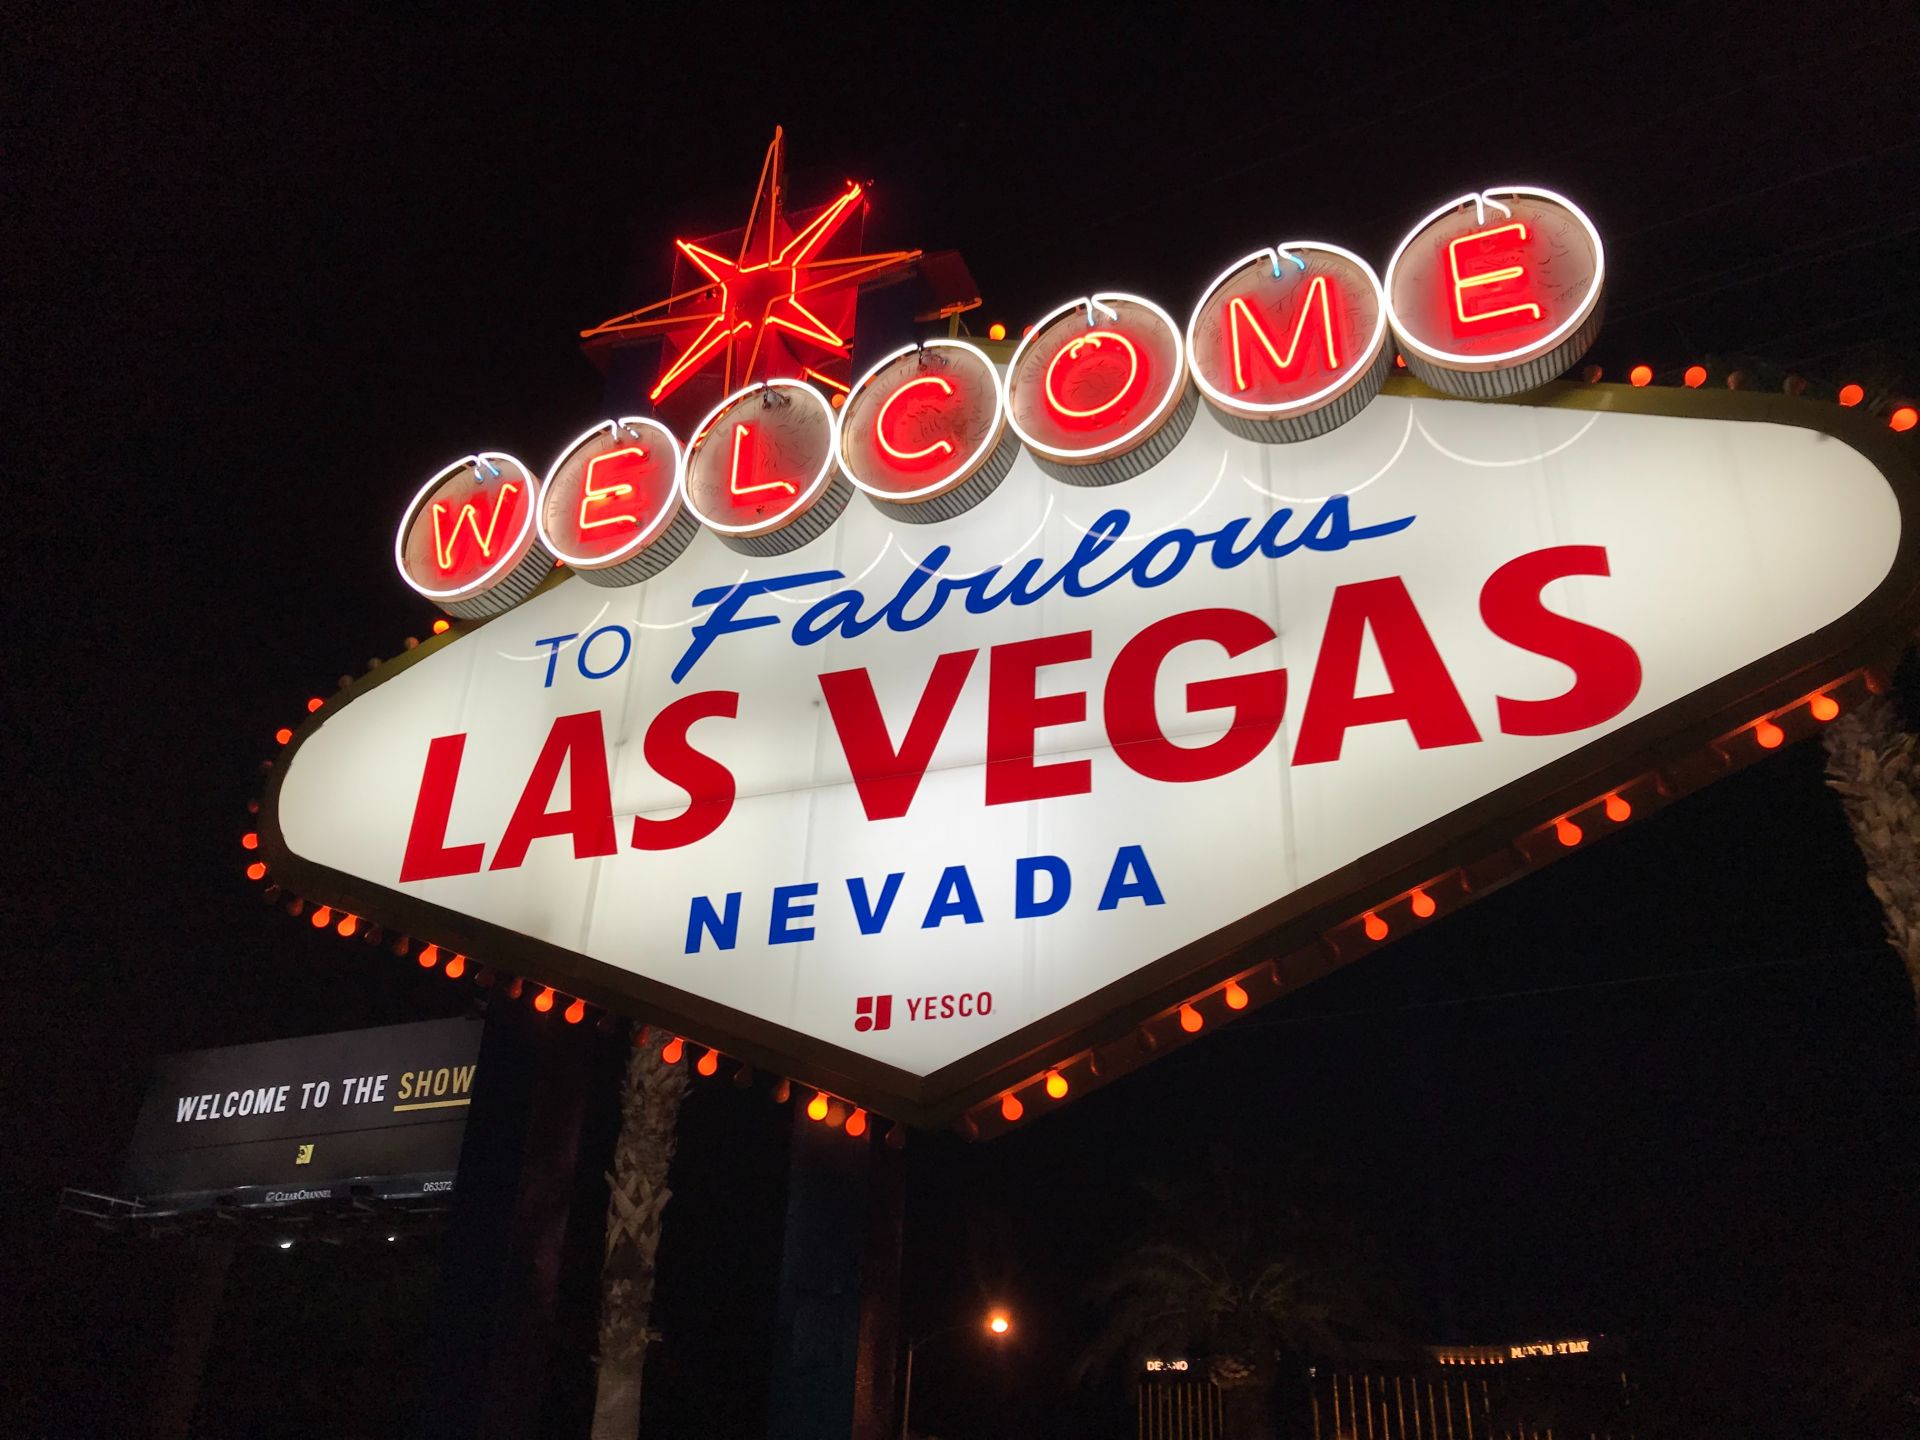 Las Vegas sign, Nevada